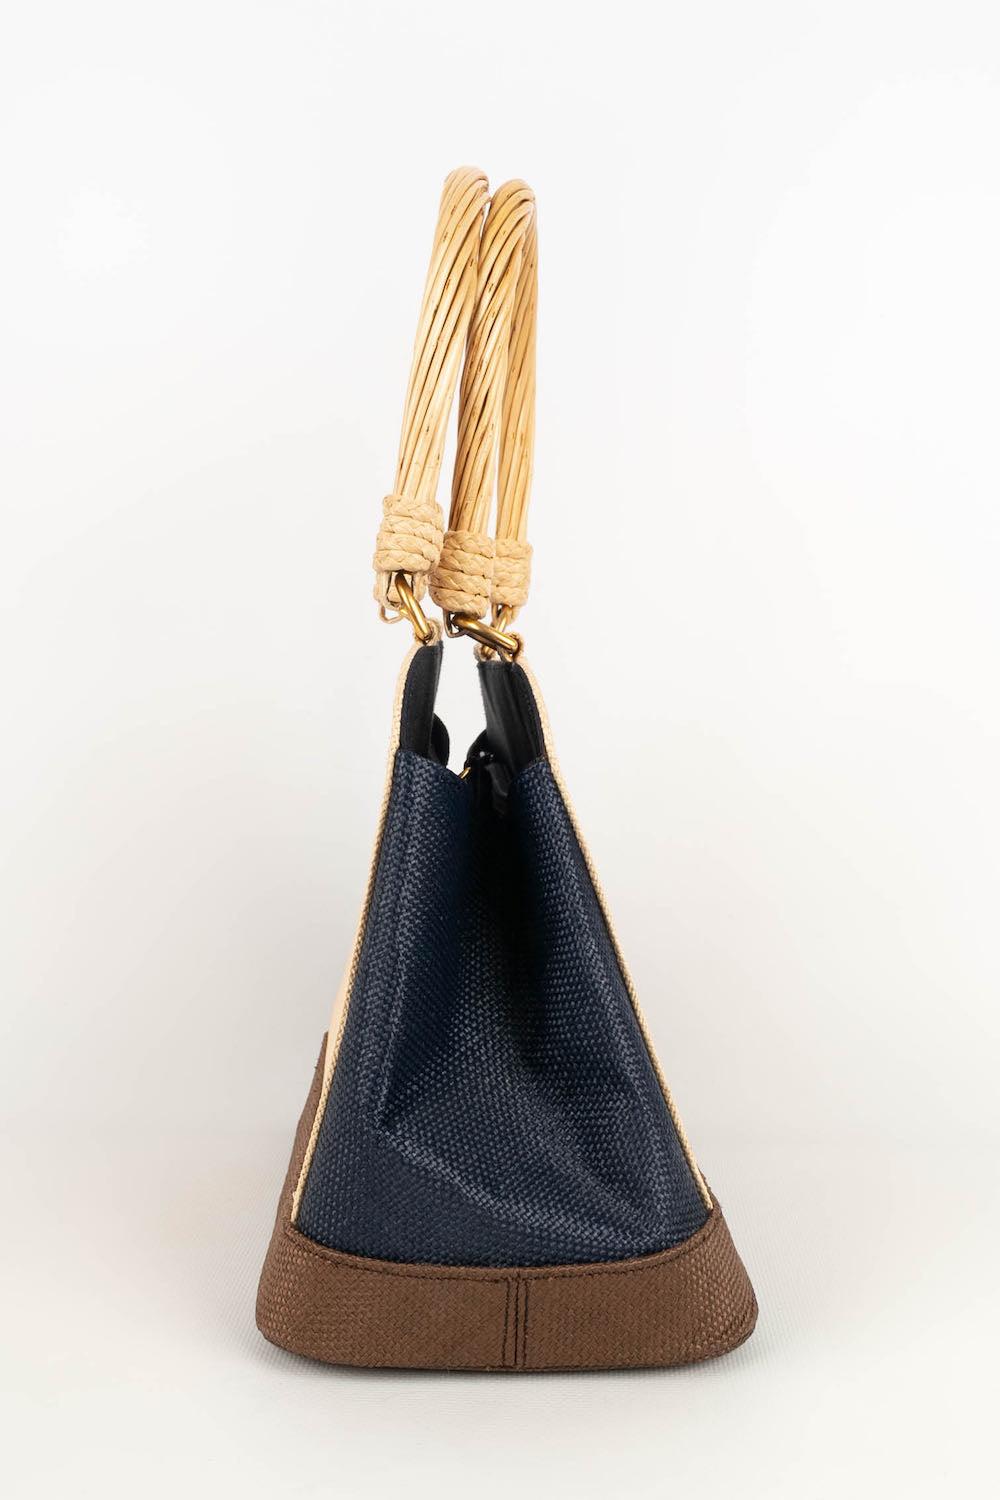 Renaud Pellegrino Handbag in Panama Straw In Excellent Condition For Sale In SAINT-OUEN-SUR-SEINE, FR